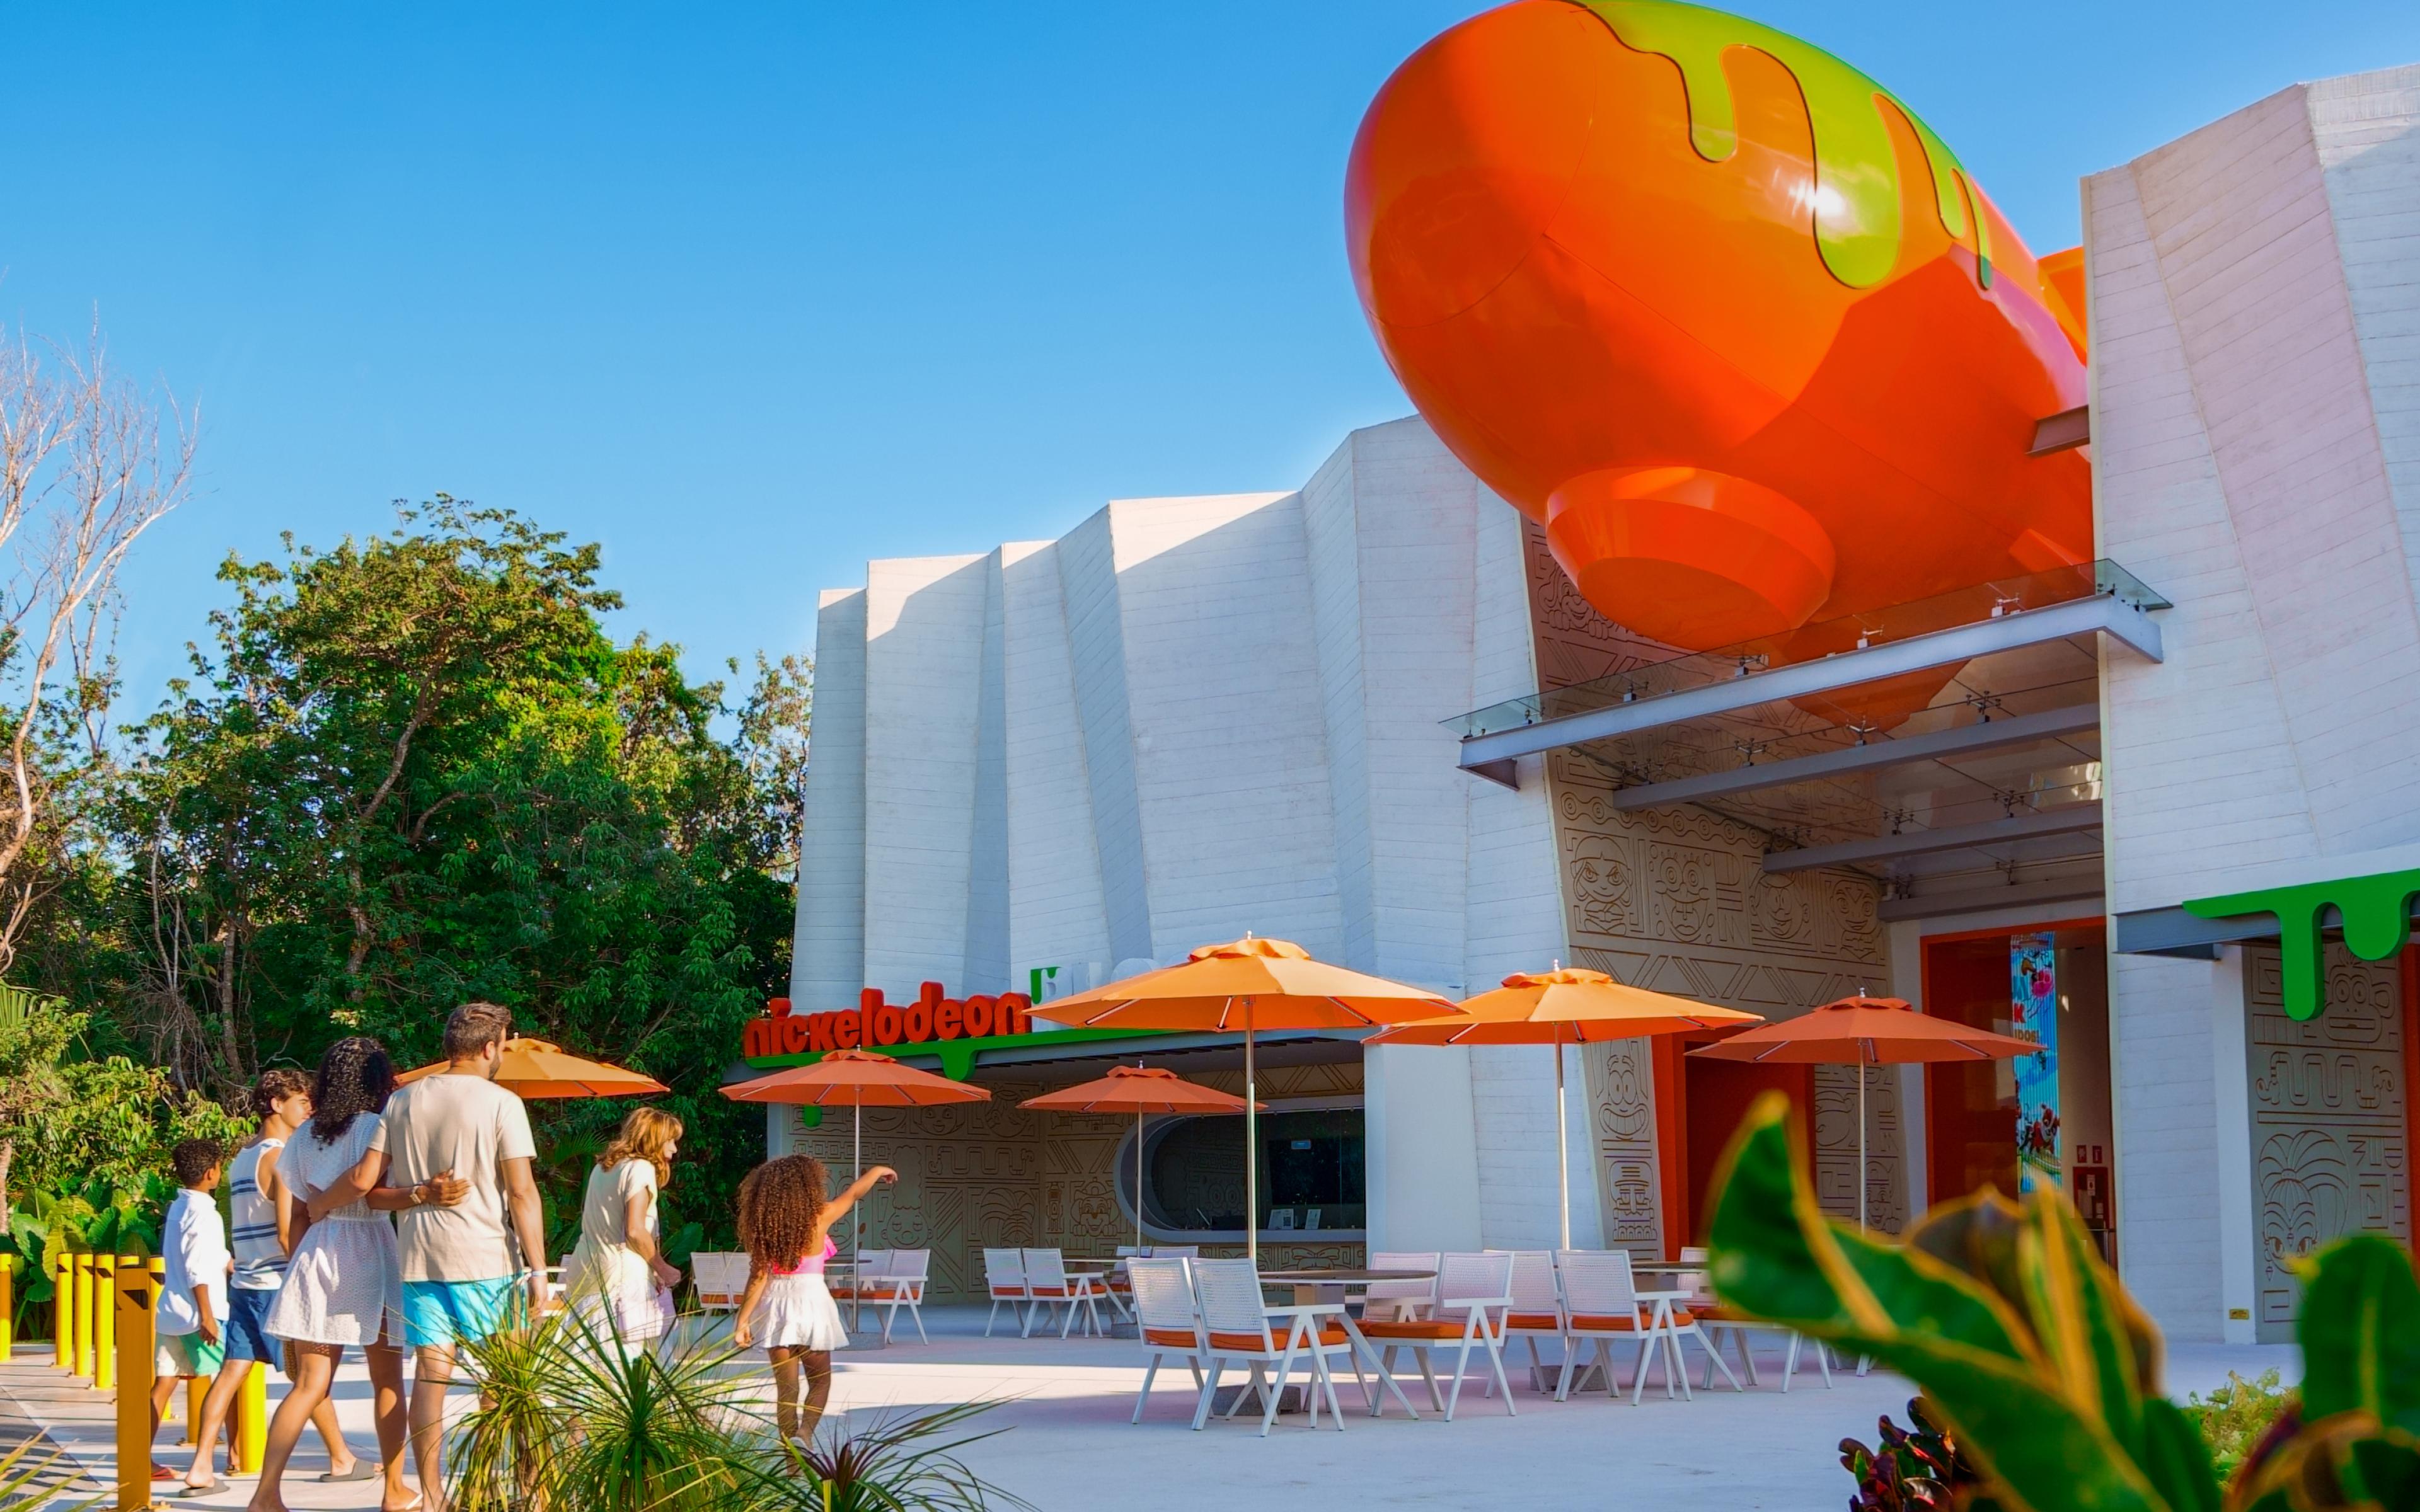 Nick Jr. Friends Event Returns to Nickelodeon Hotels & Resorts Punta Cana